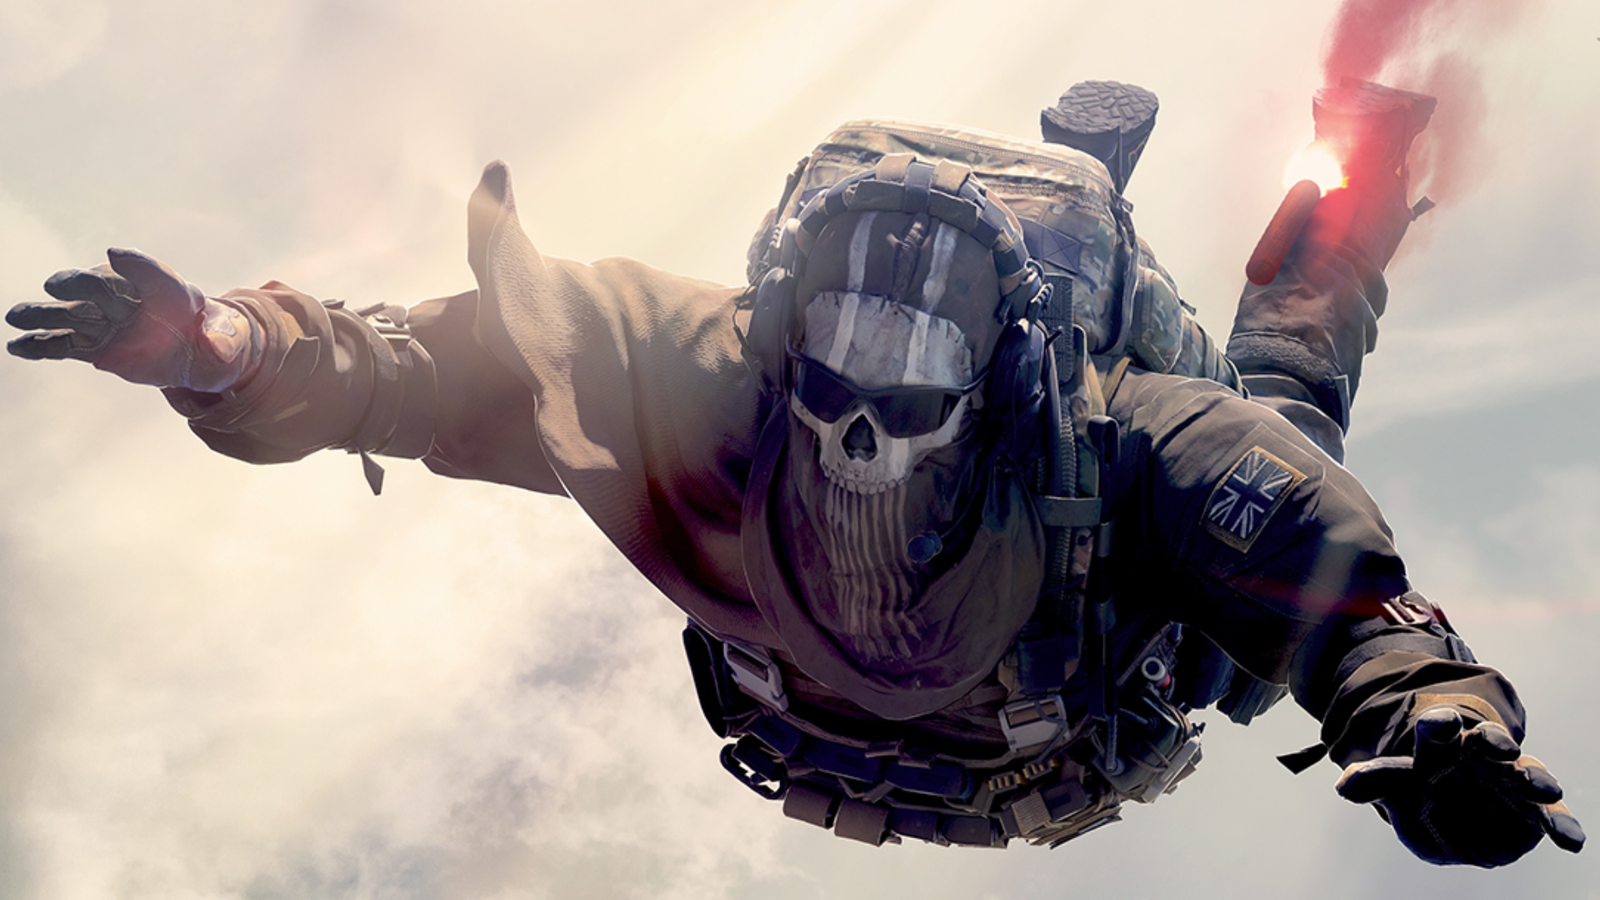 Call of Duty: Warzone 2.0 release won't shutdown the original game